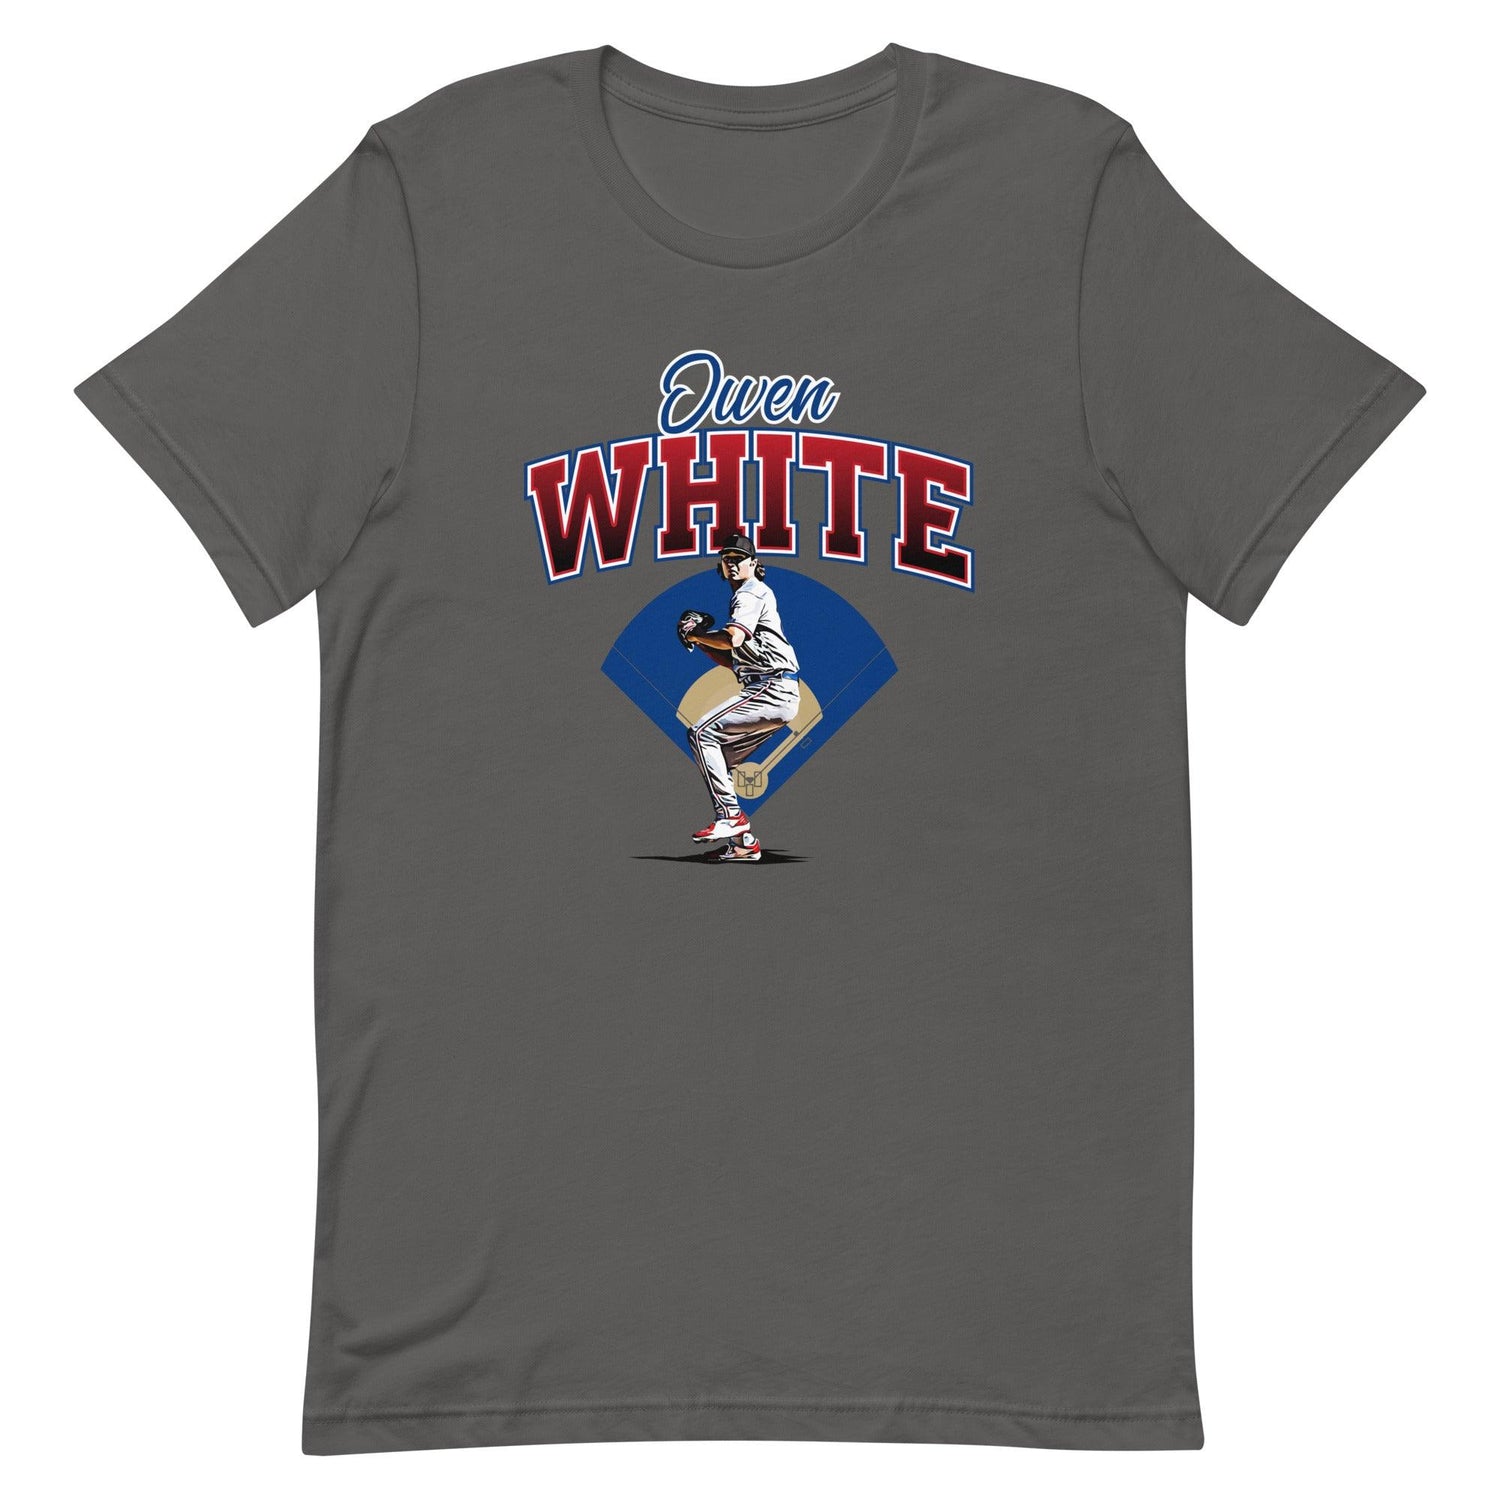 Owen White “Essential” t-shirt - Fan Arch